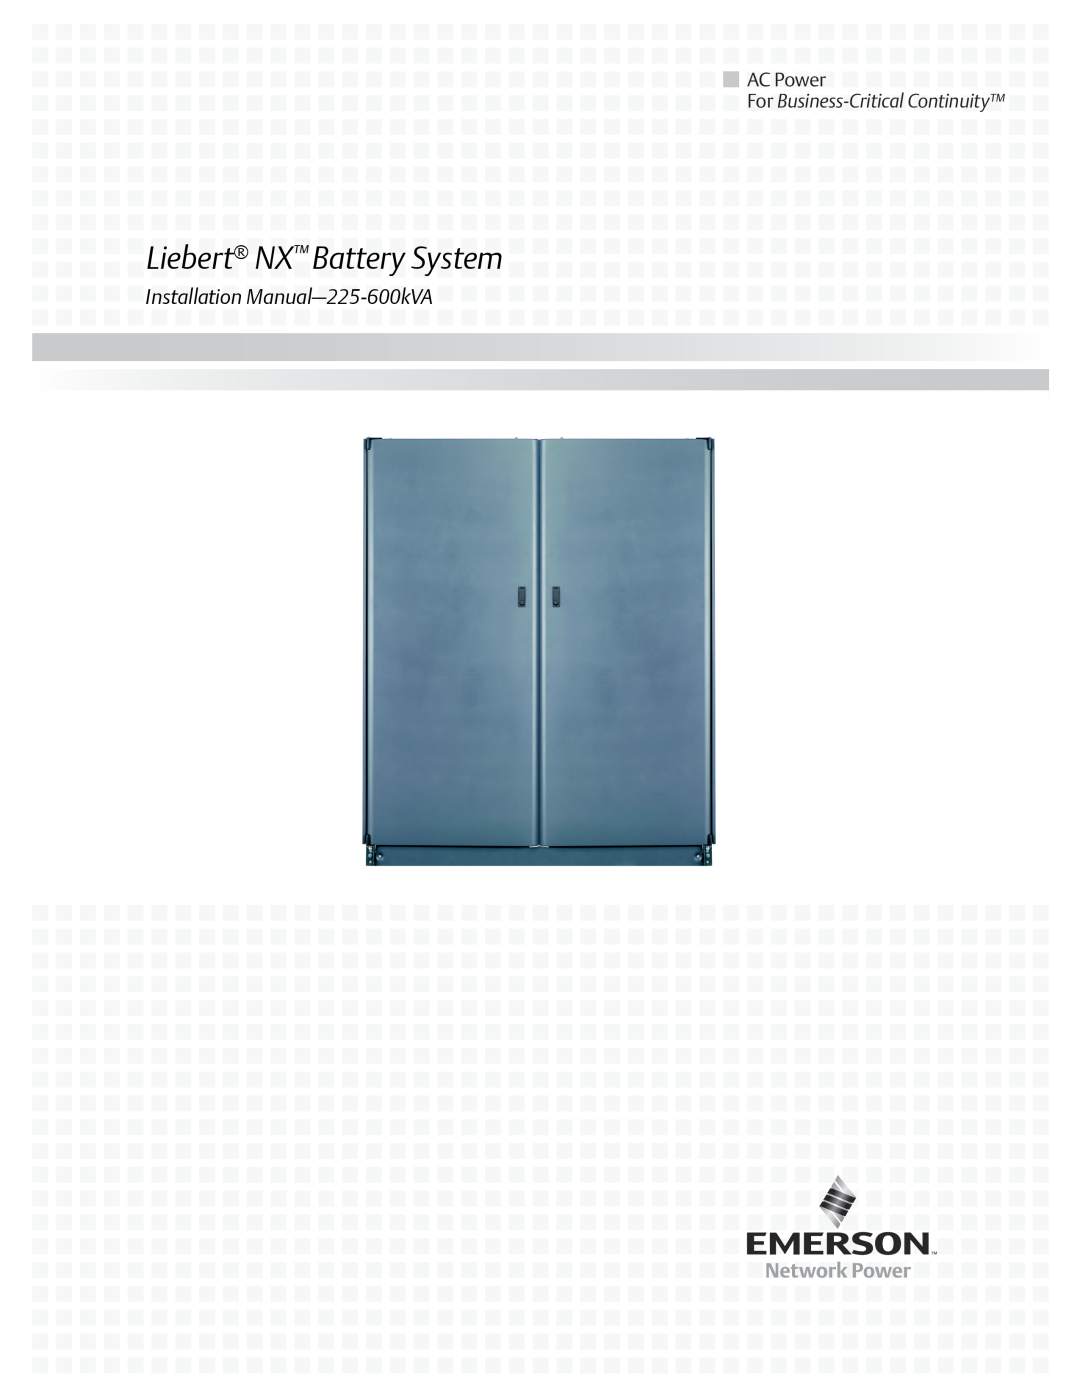 Emerson 225-600KVA installation manual Liebert NX Battery System, Installation Manual-225-600kVA 